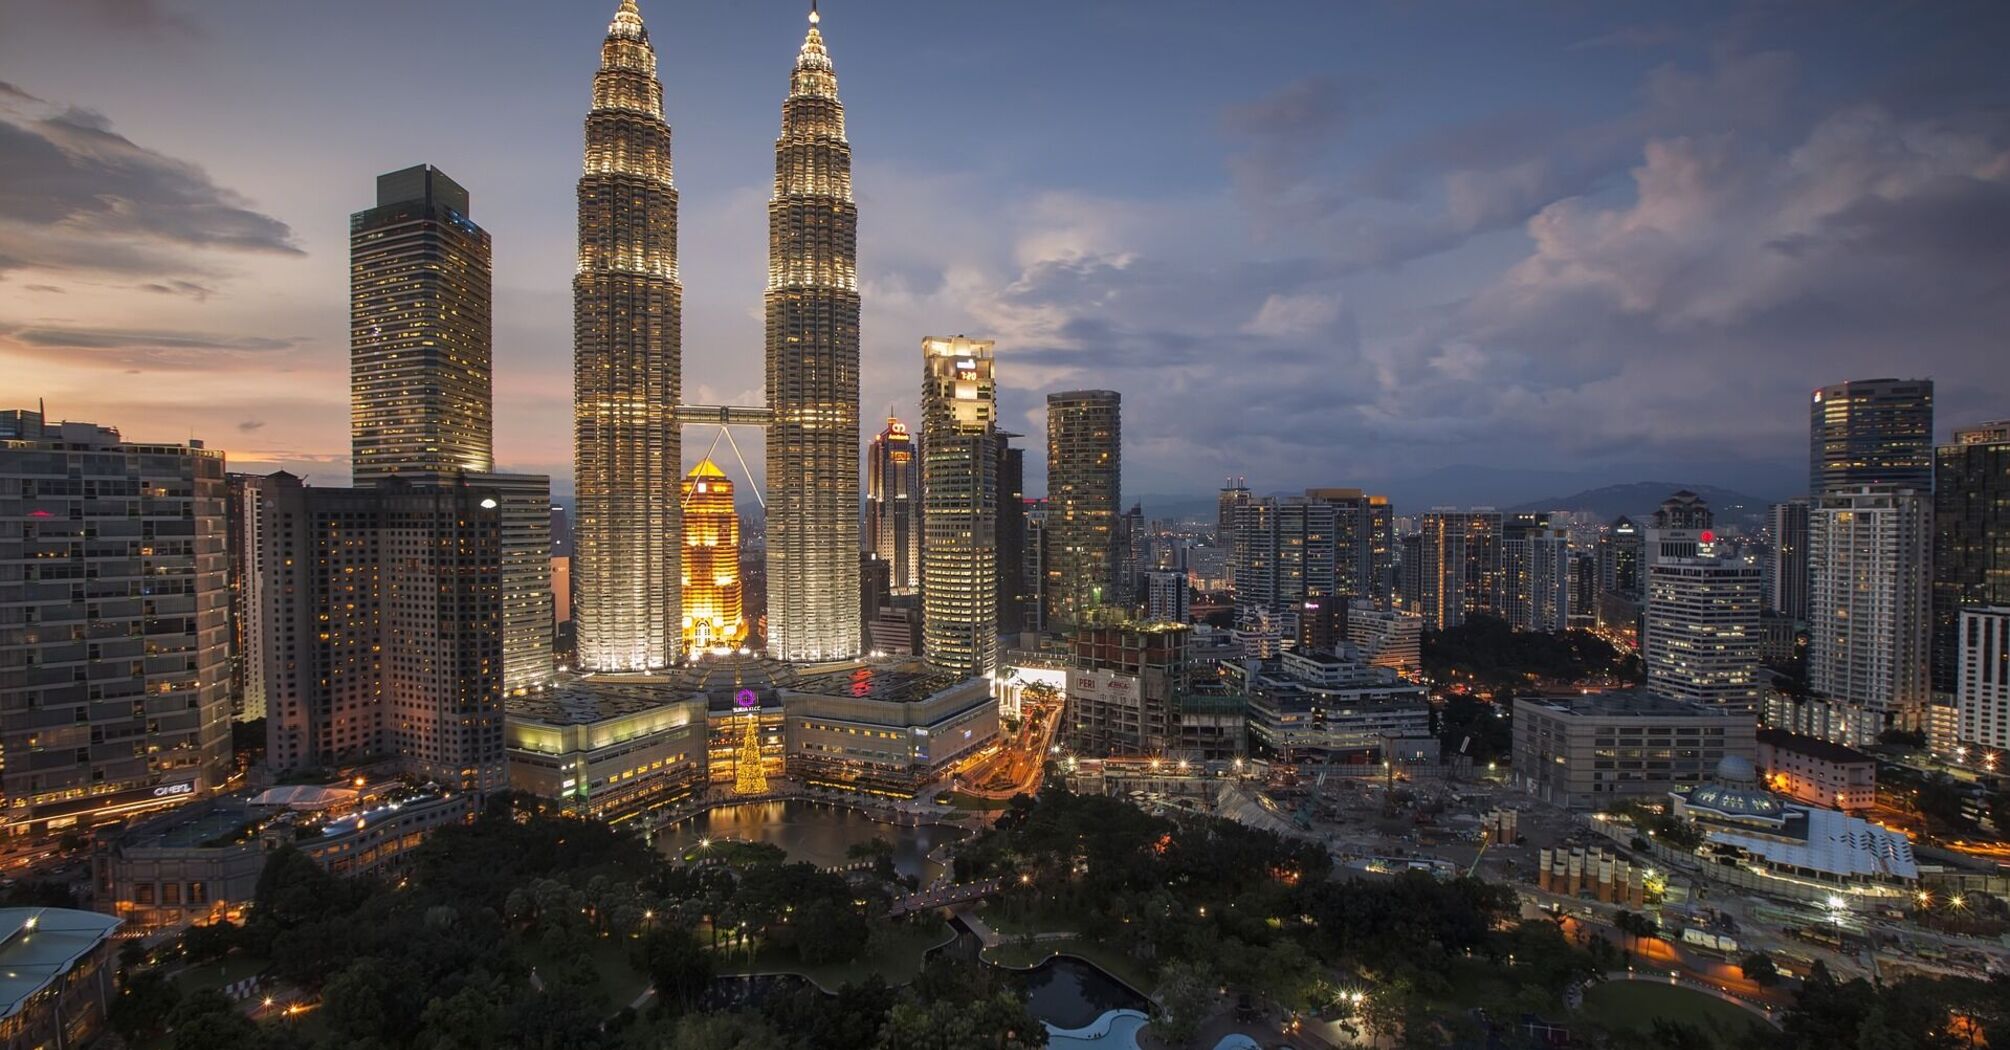 Kuala Lumpur skyline at dusk with Petronas Towers illuminated